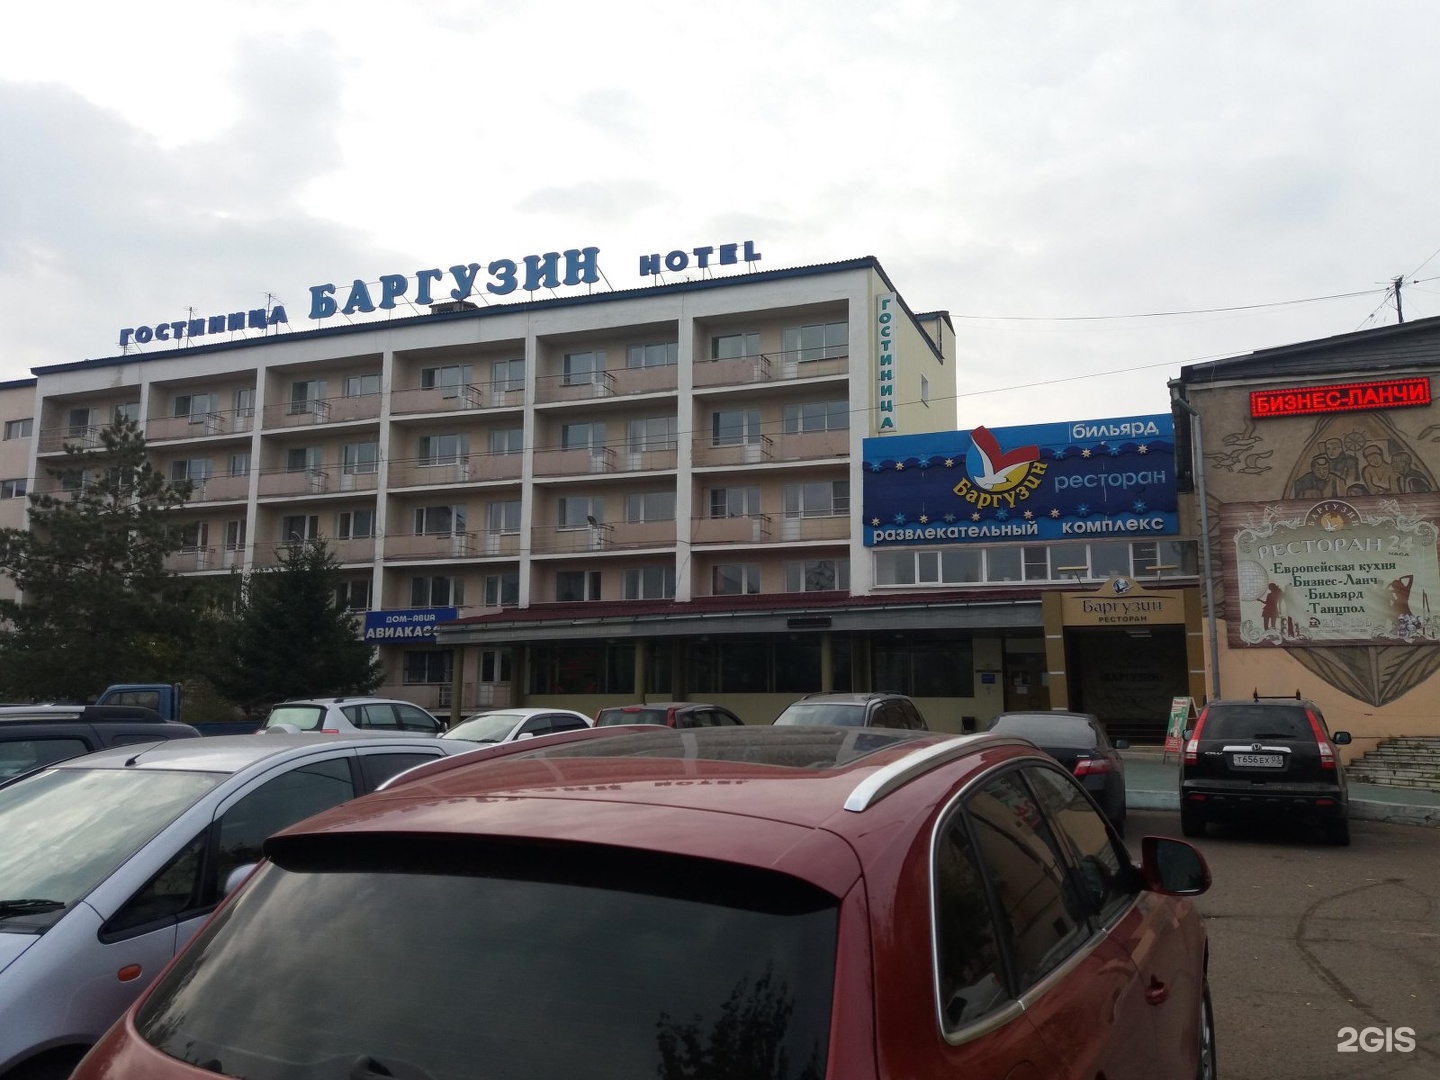 Баргузин гостиница